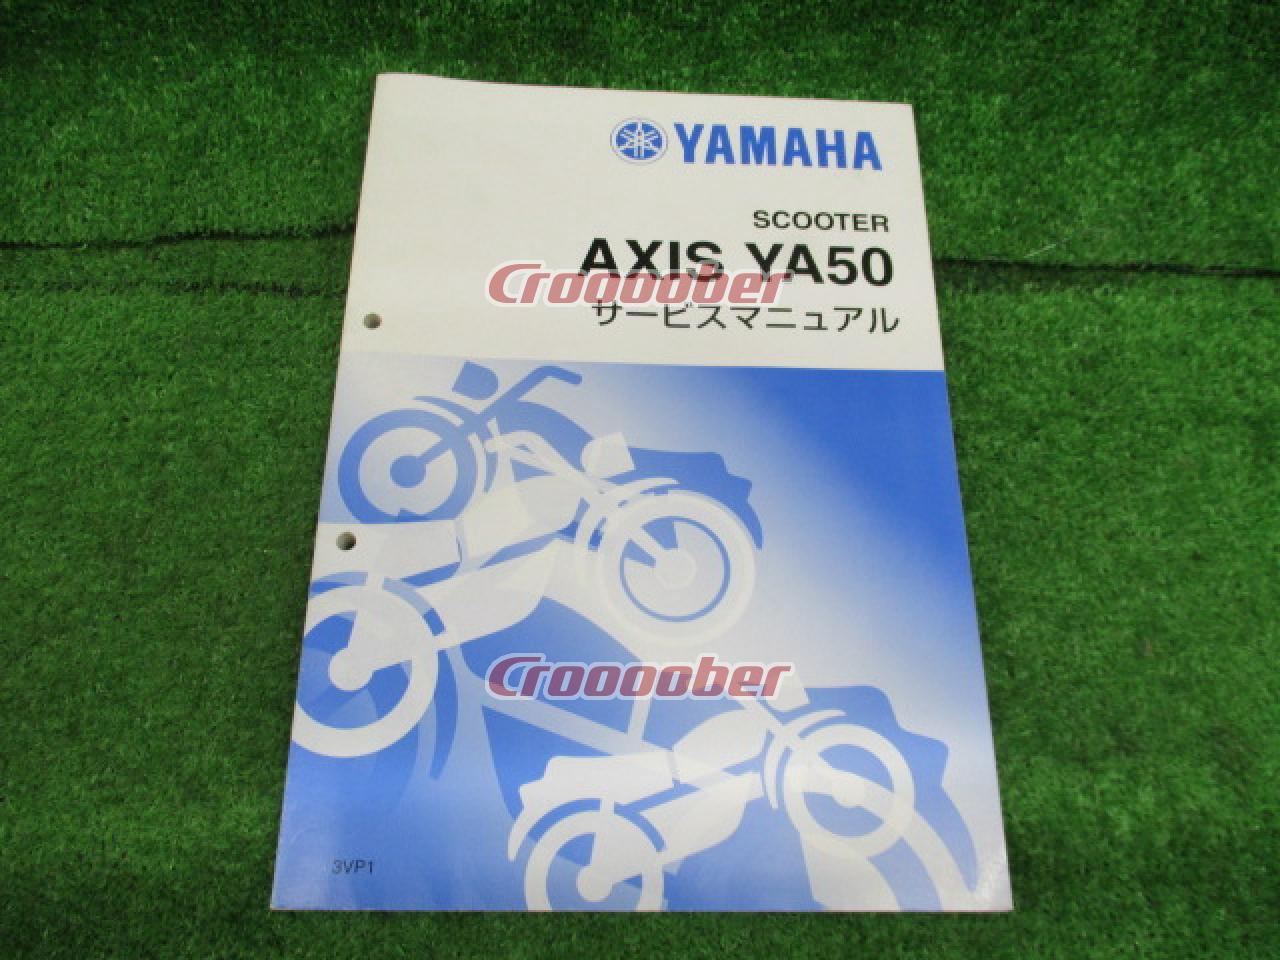 YAMAHA ya50 R AXIS Service Information manutenzione officina manuale schema elettrico 